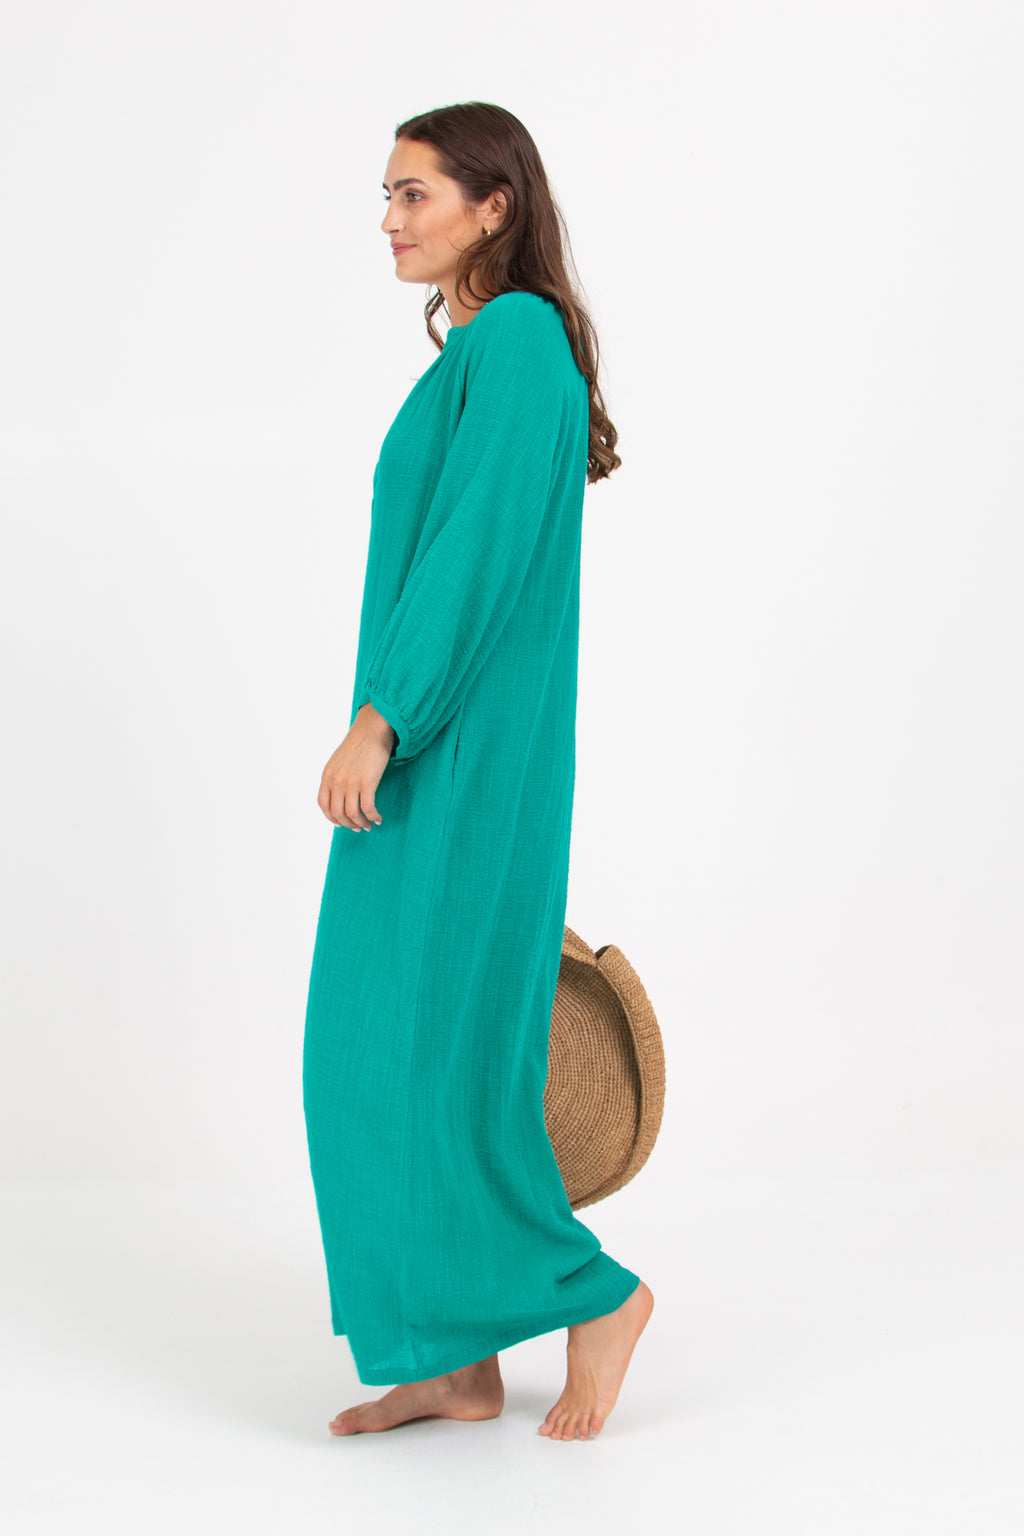 Claudette lange emerald jurk